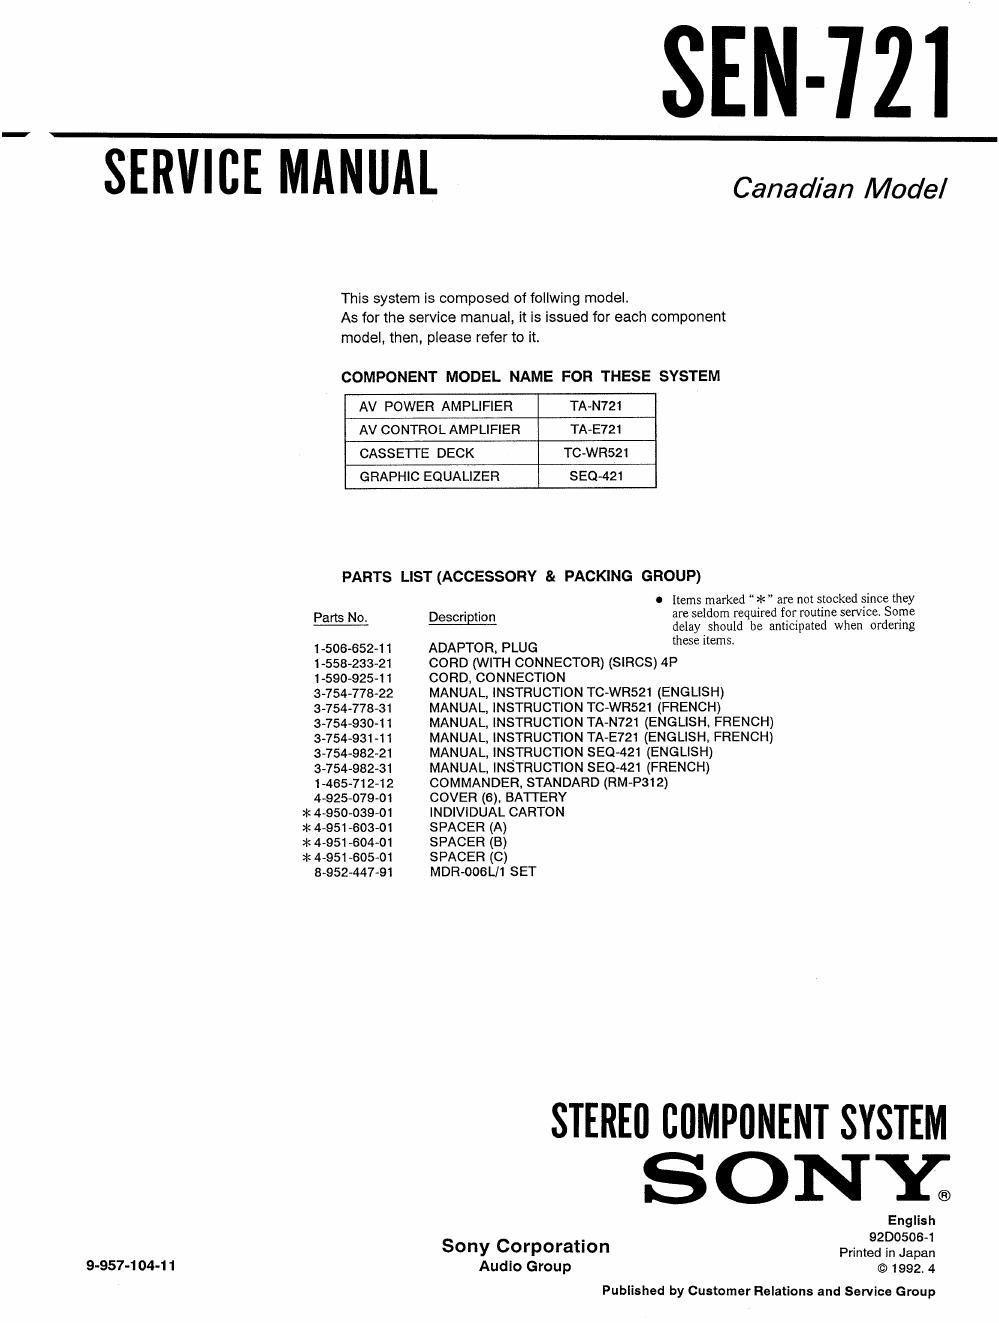 sony sen 721 service manual